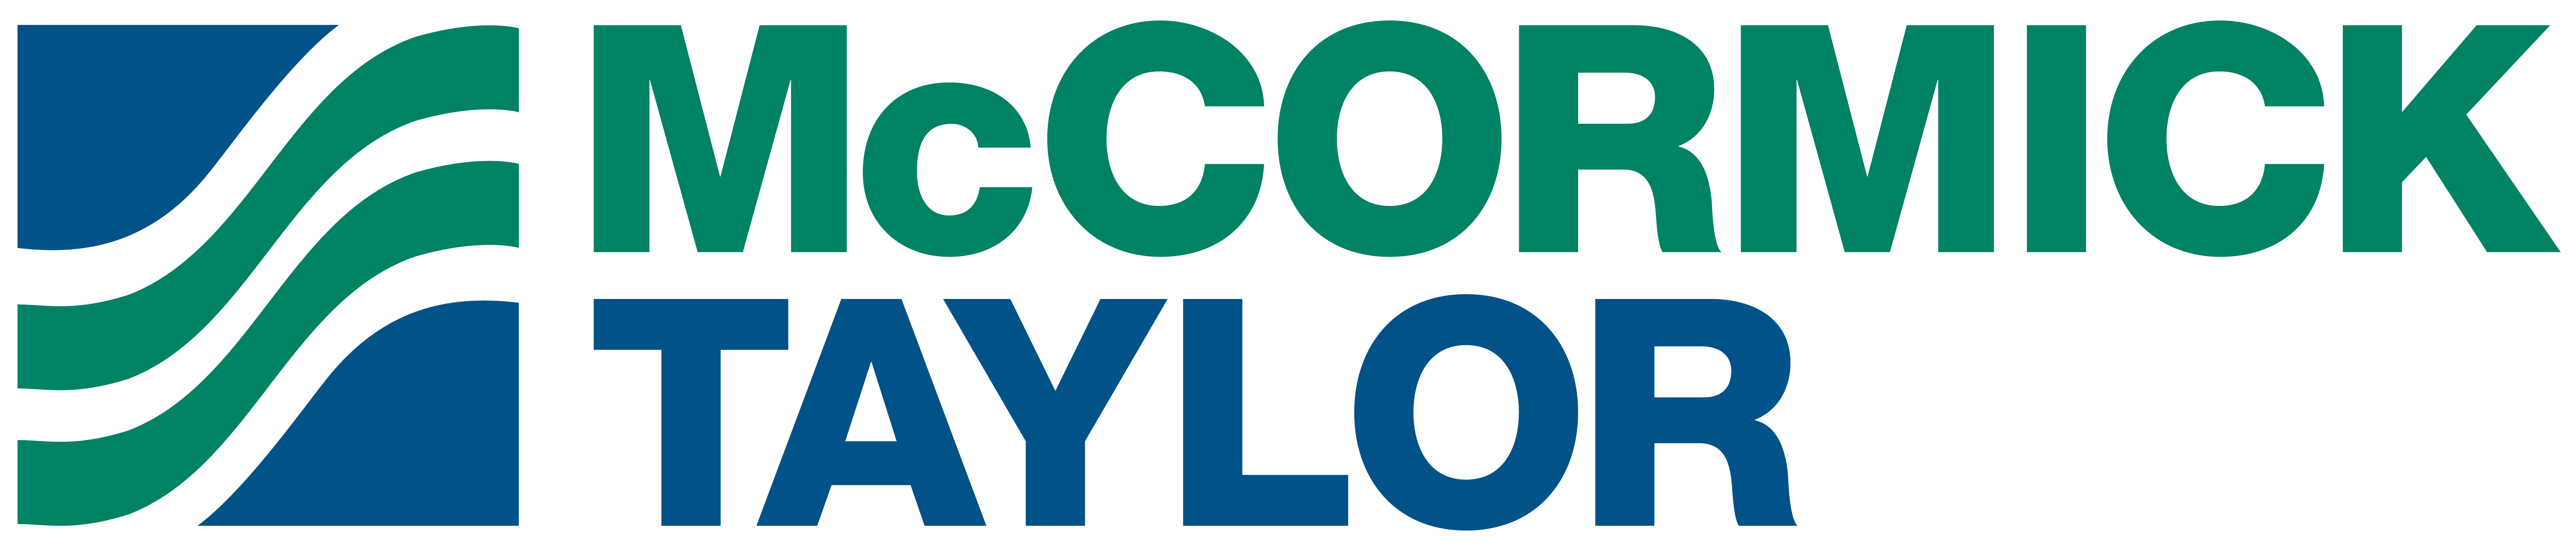 Silver - McCormick Taylor Logo